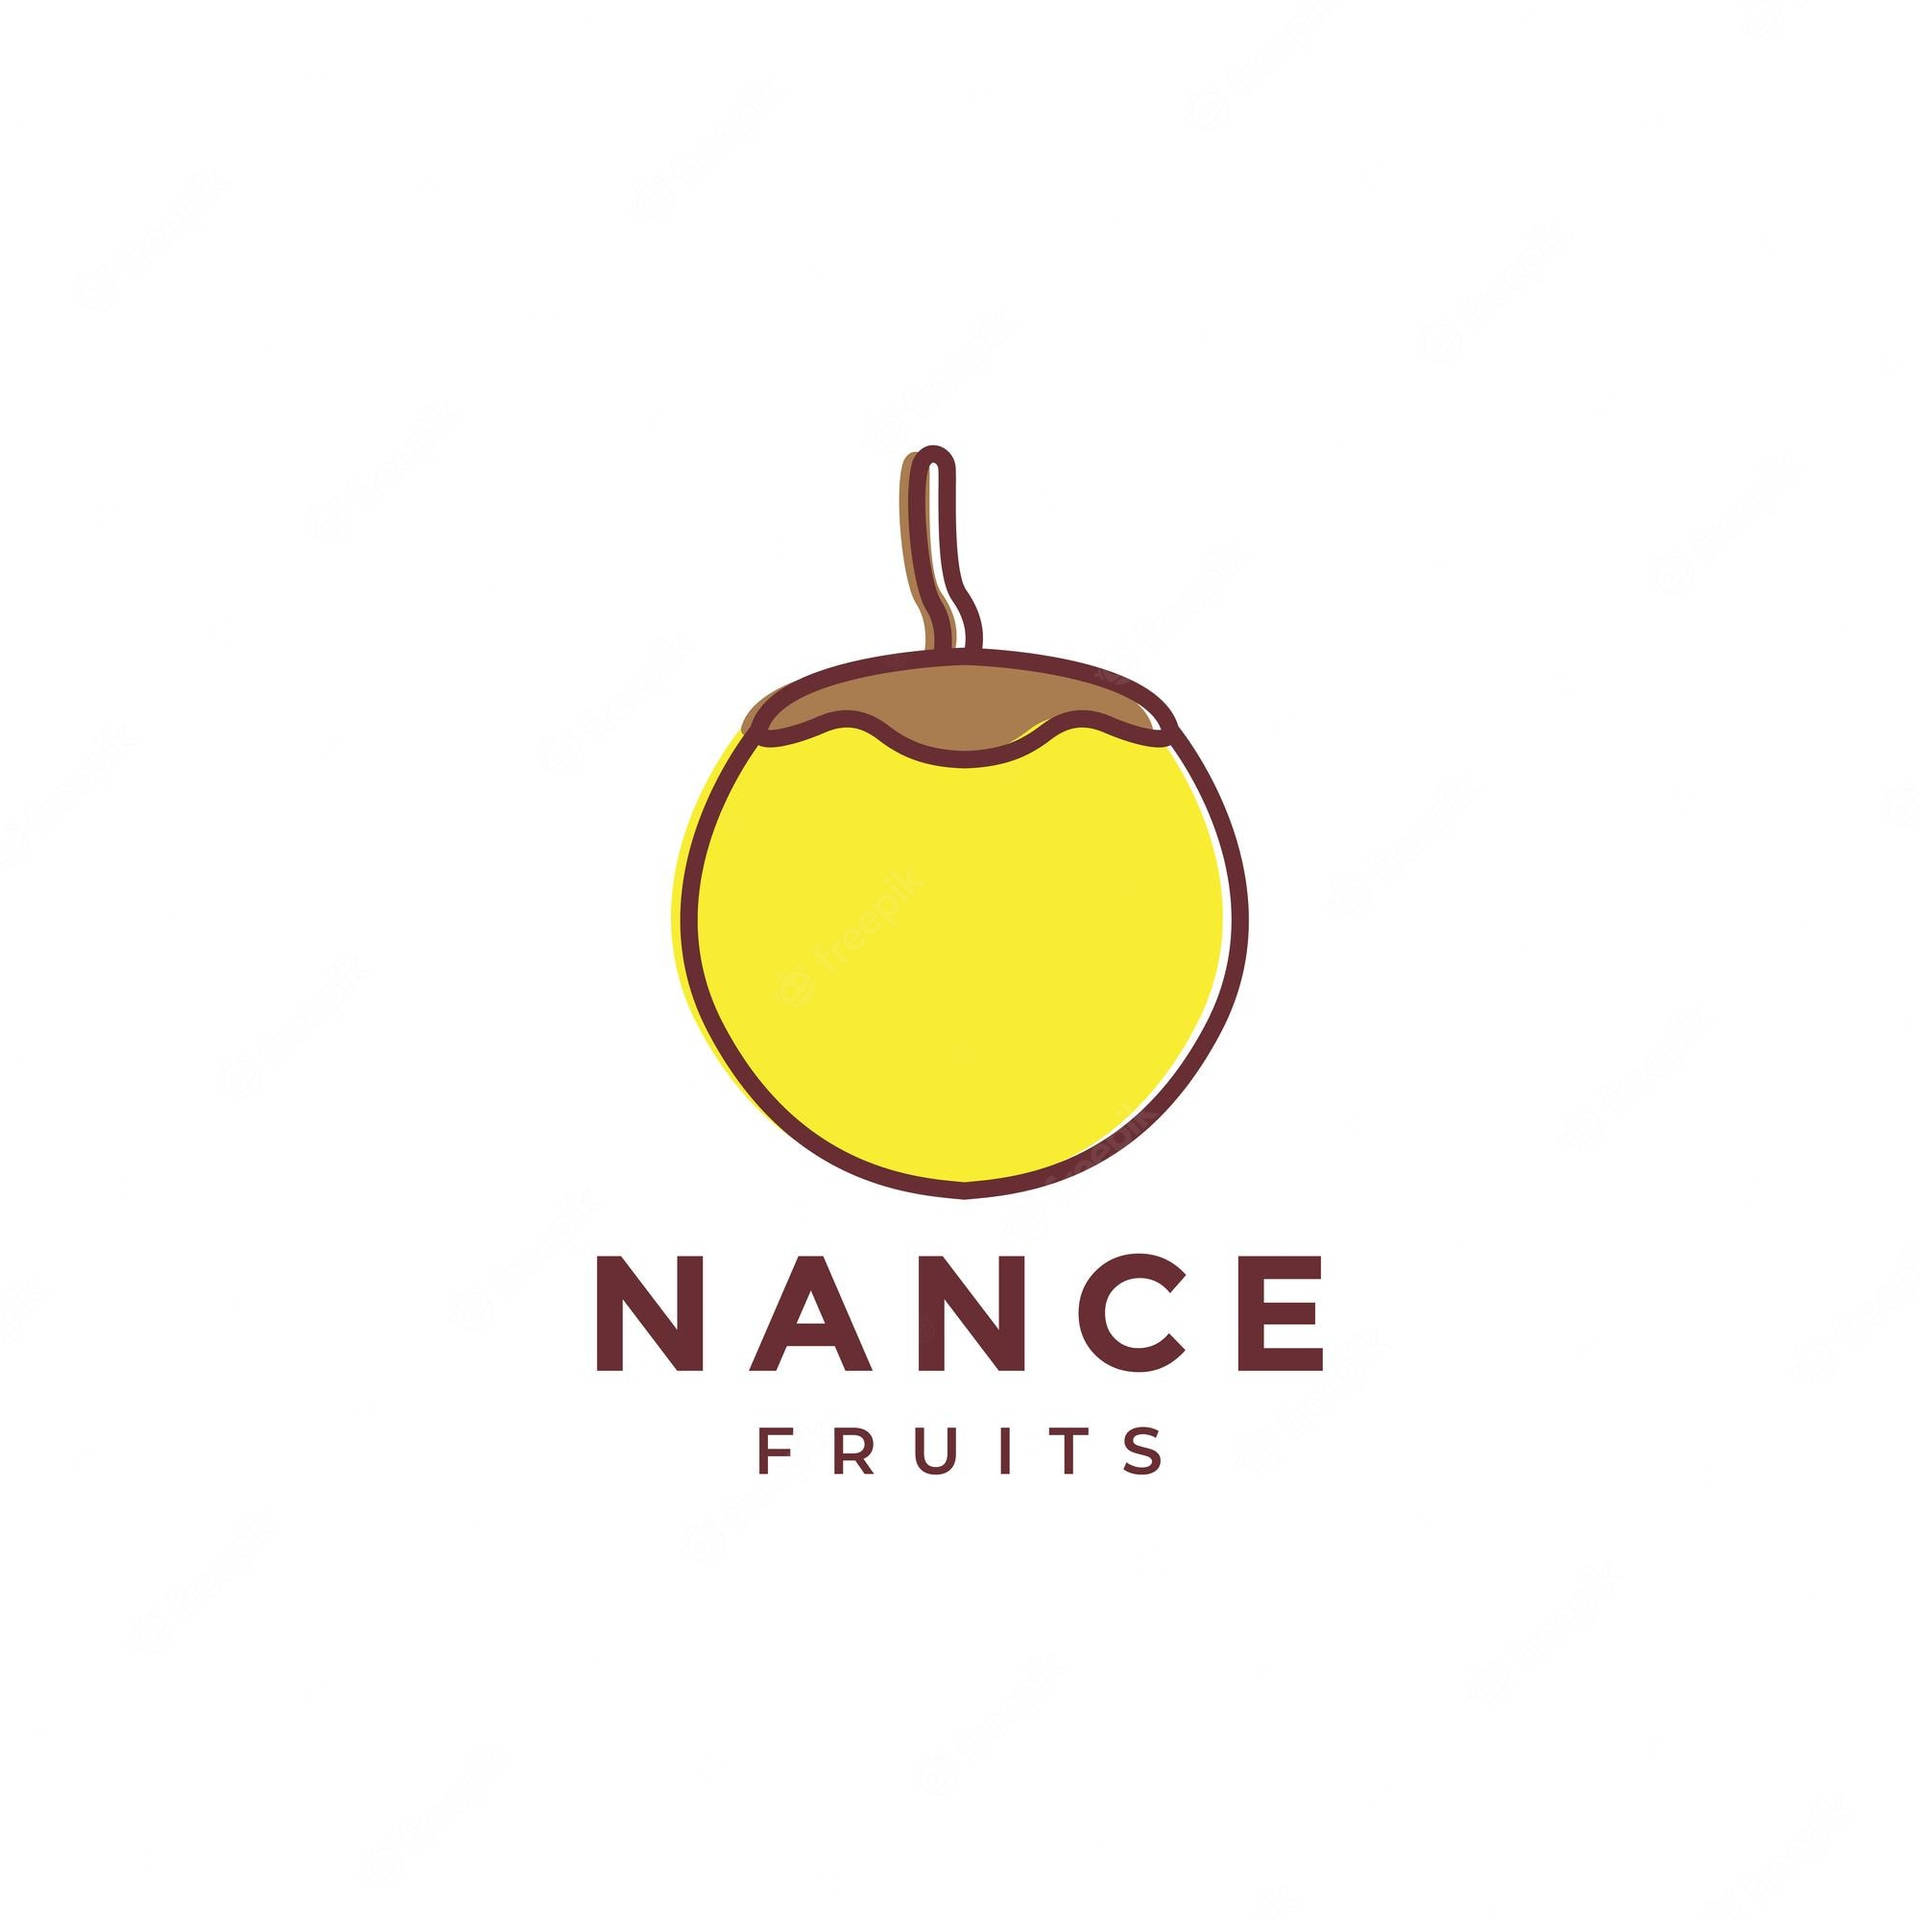 Pristine Nance Fruits in Artistic 2D Display Wallpaper